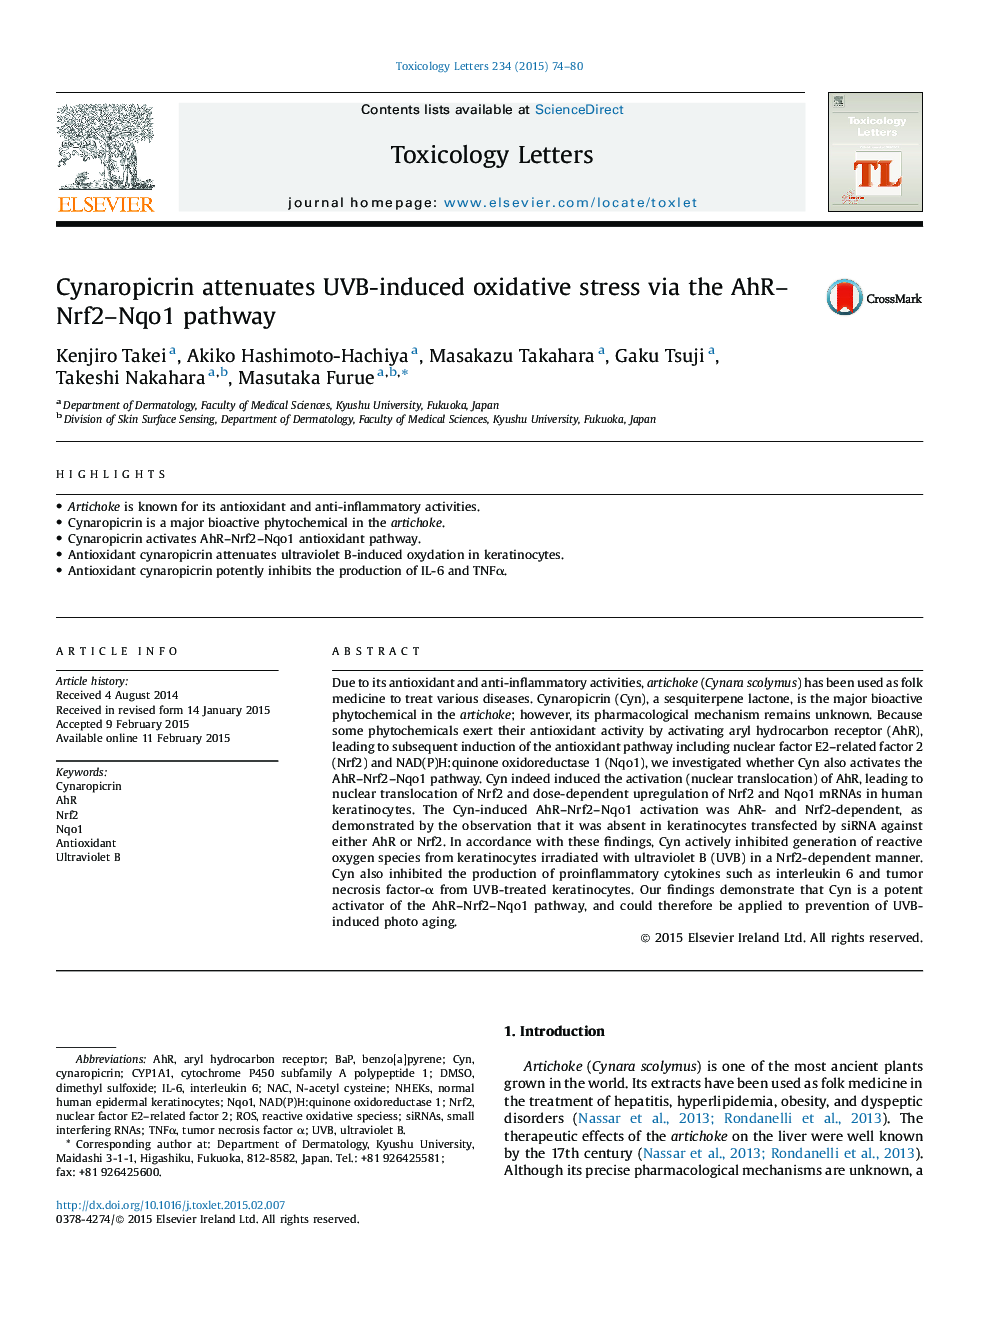 Cynaropicrin attenuates UVB-induced oxidative stress via the AhR–Nrf2–Nqo1 pathway